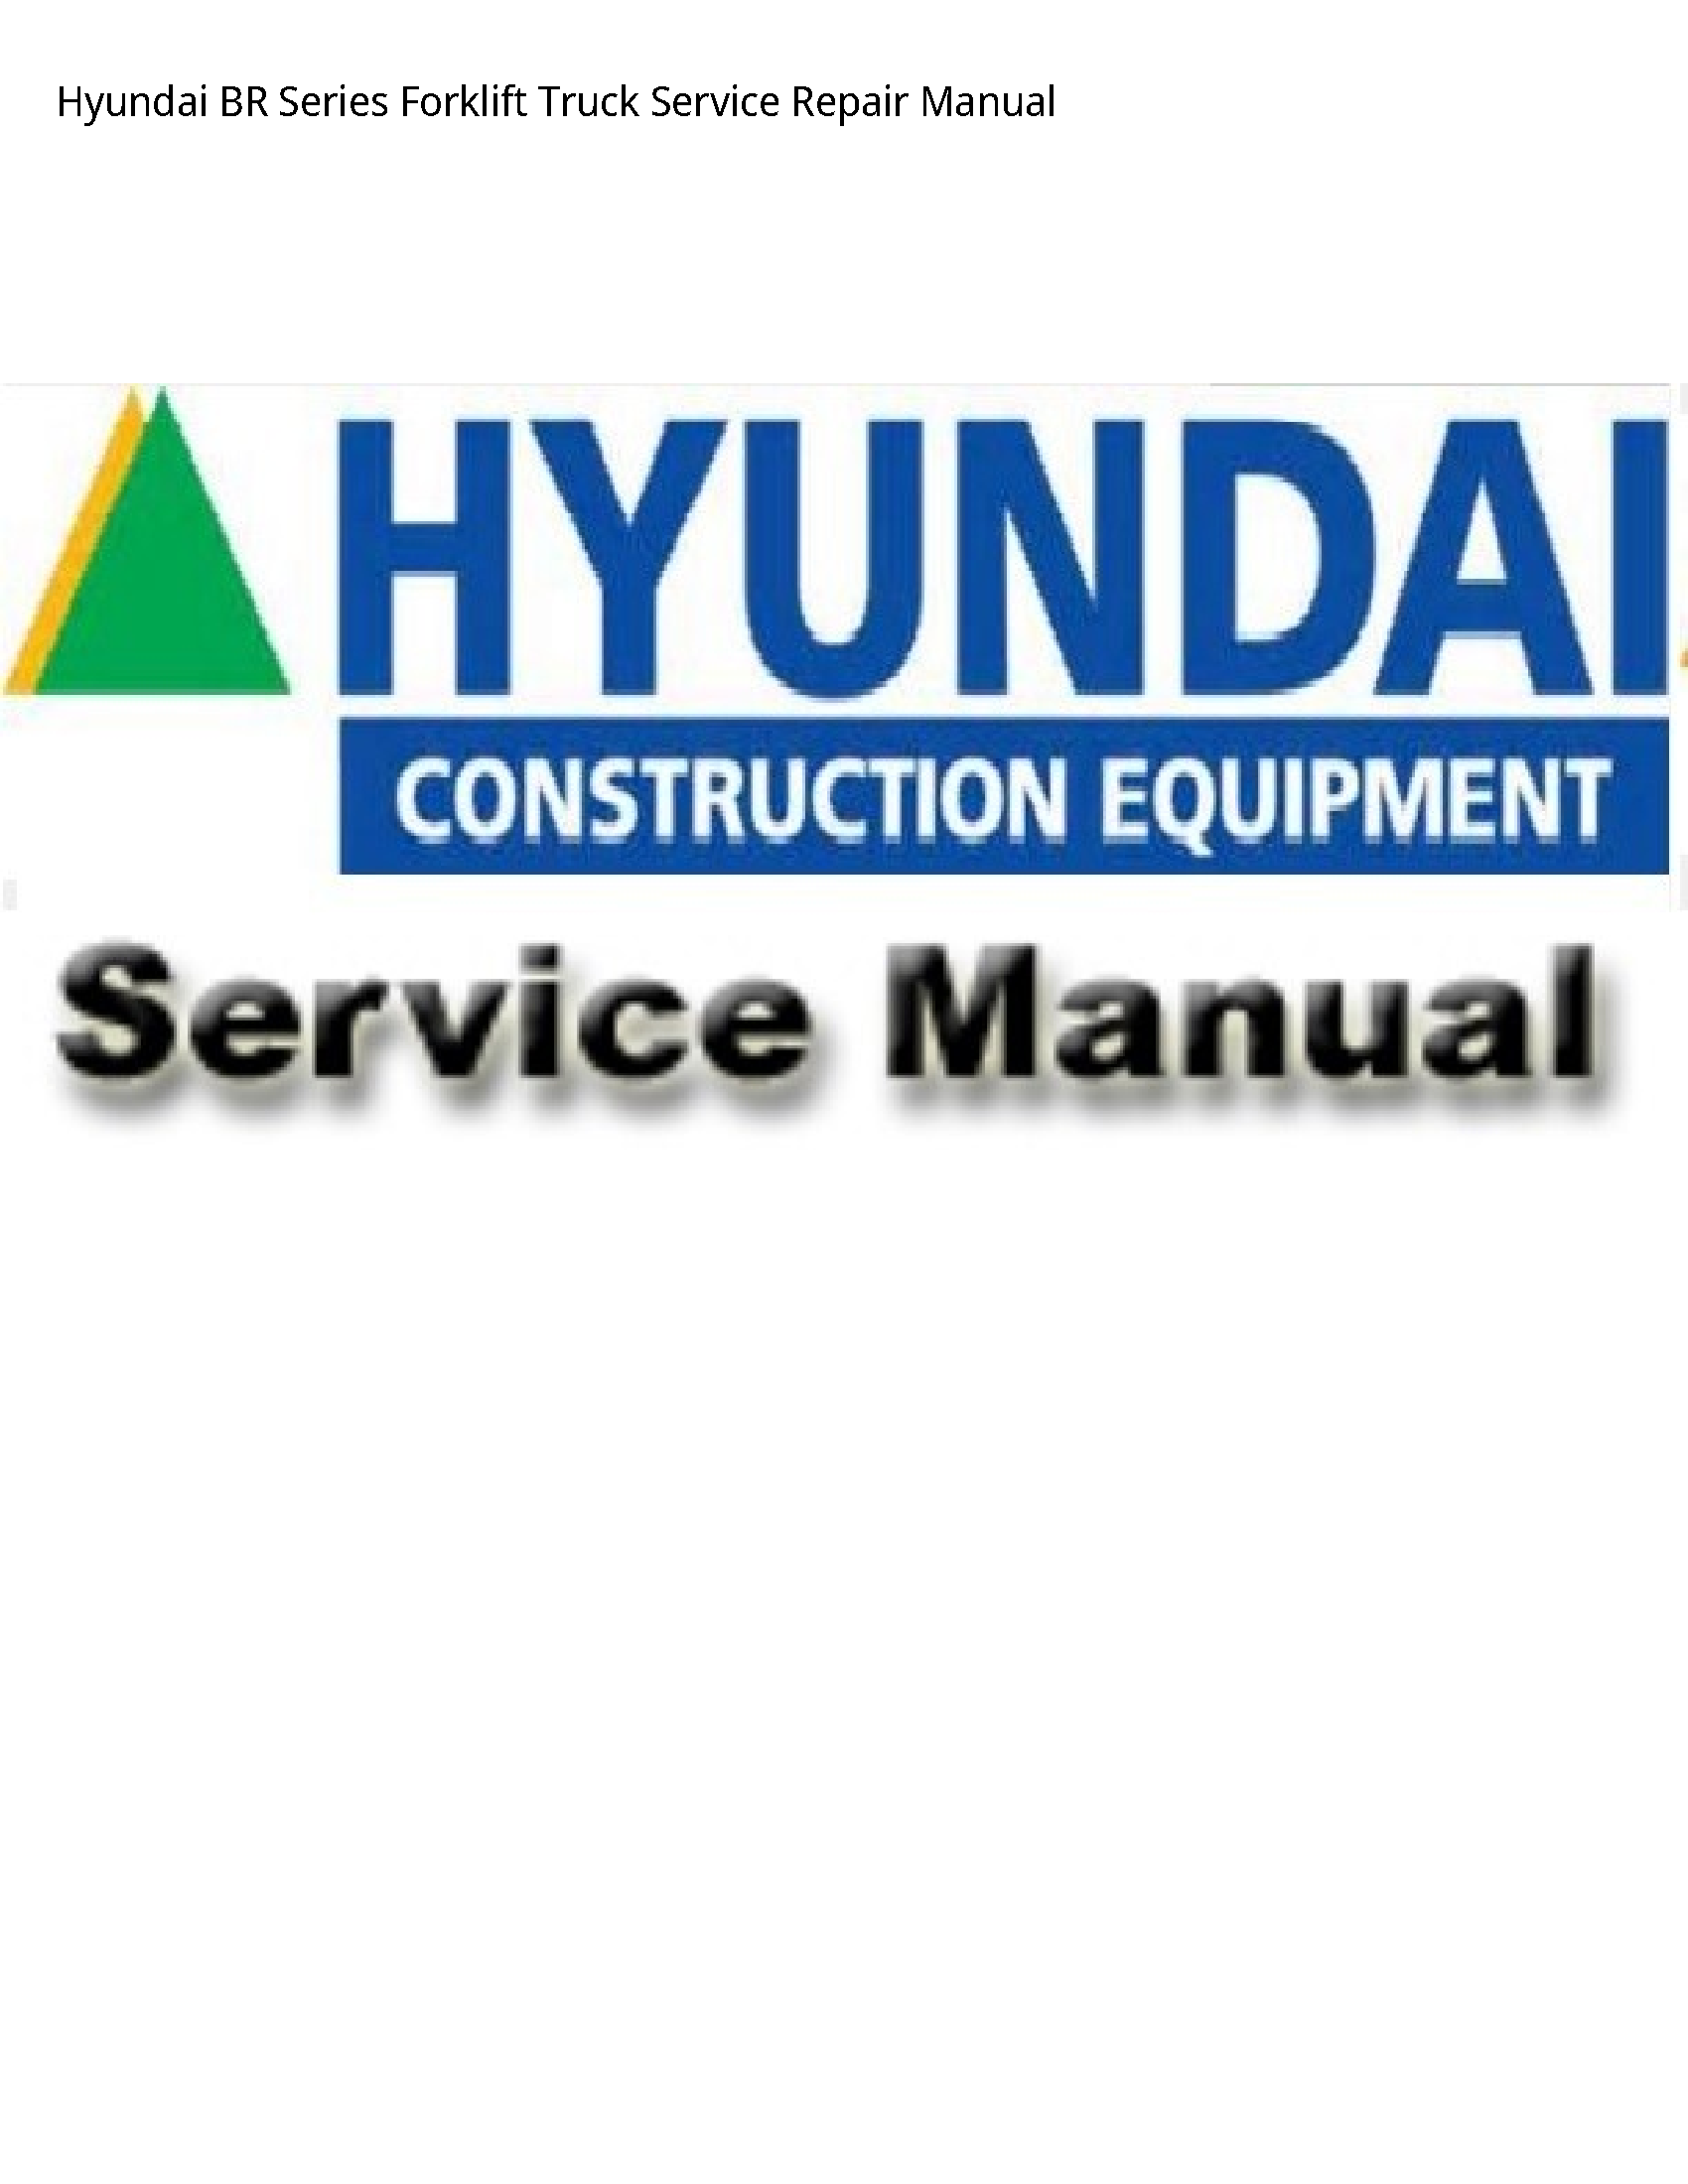 Hyundai BR Series Forklift Truck manual